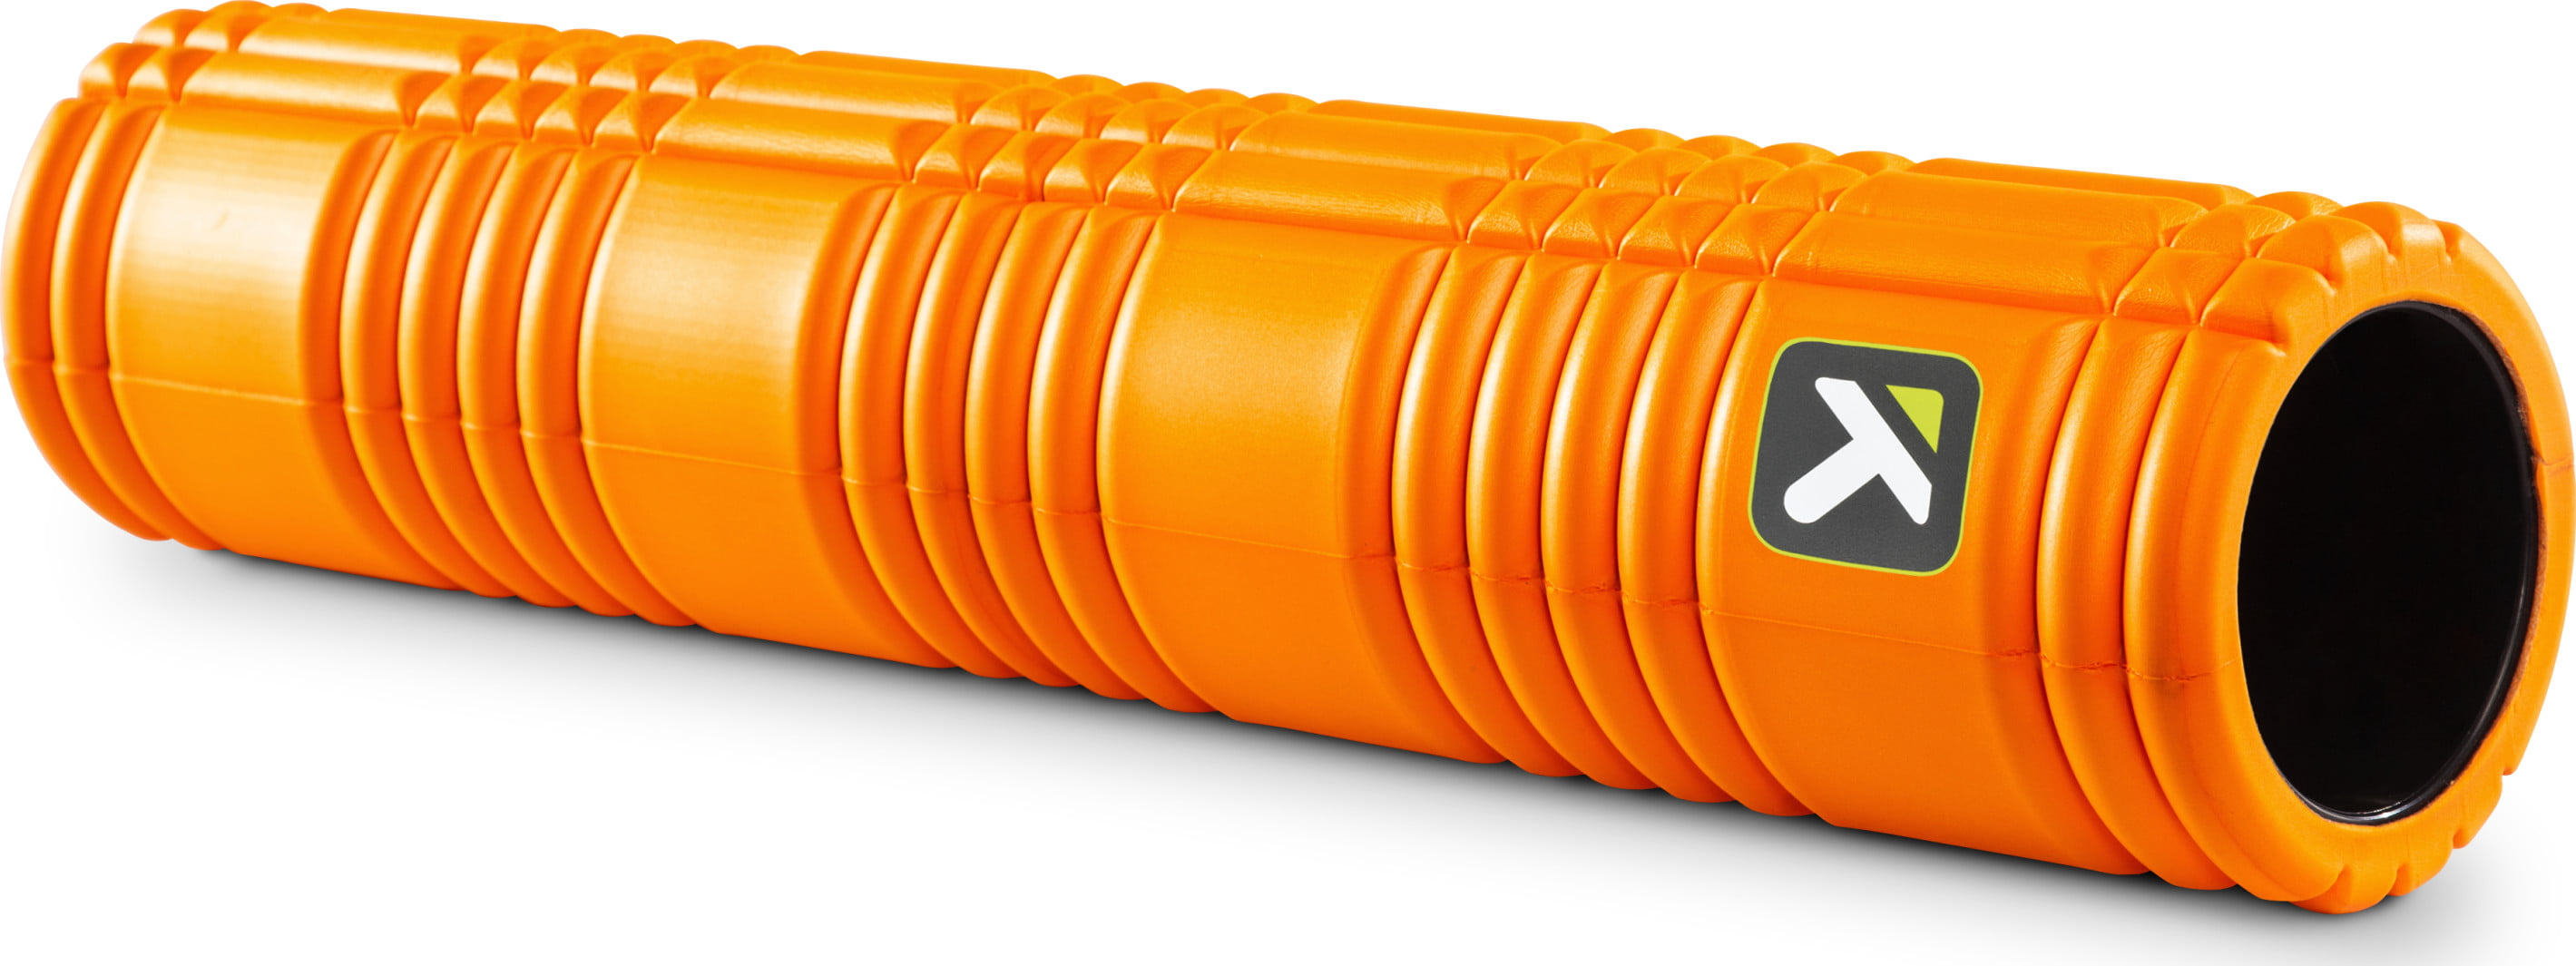 TriggerPoint GRID Foam Roller Orange 13